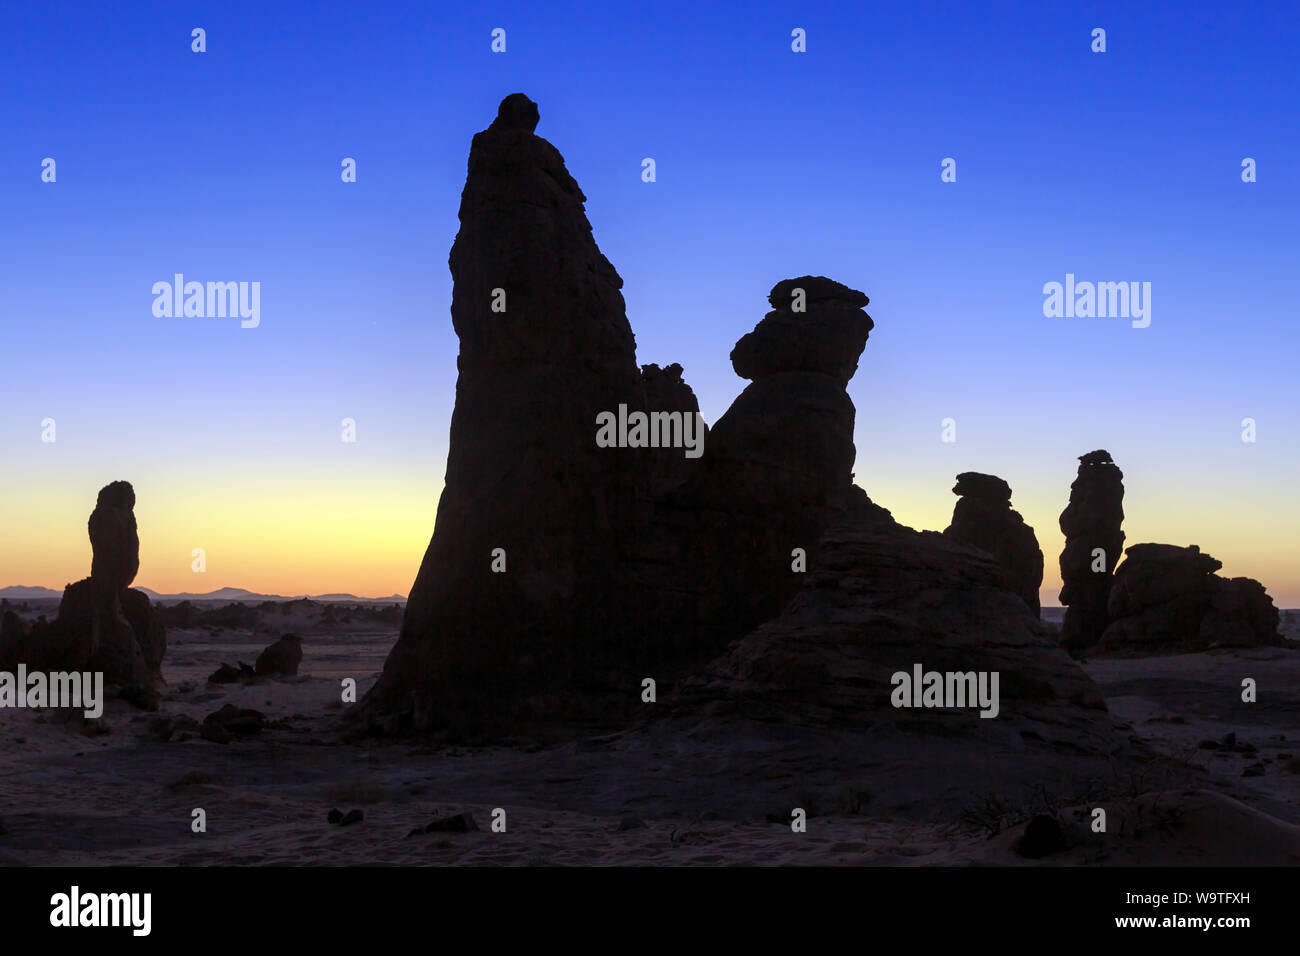 Silhouette of rock formations at sunset, Riyadh, Saudi Arabia Stock Photo